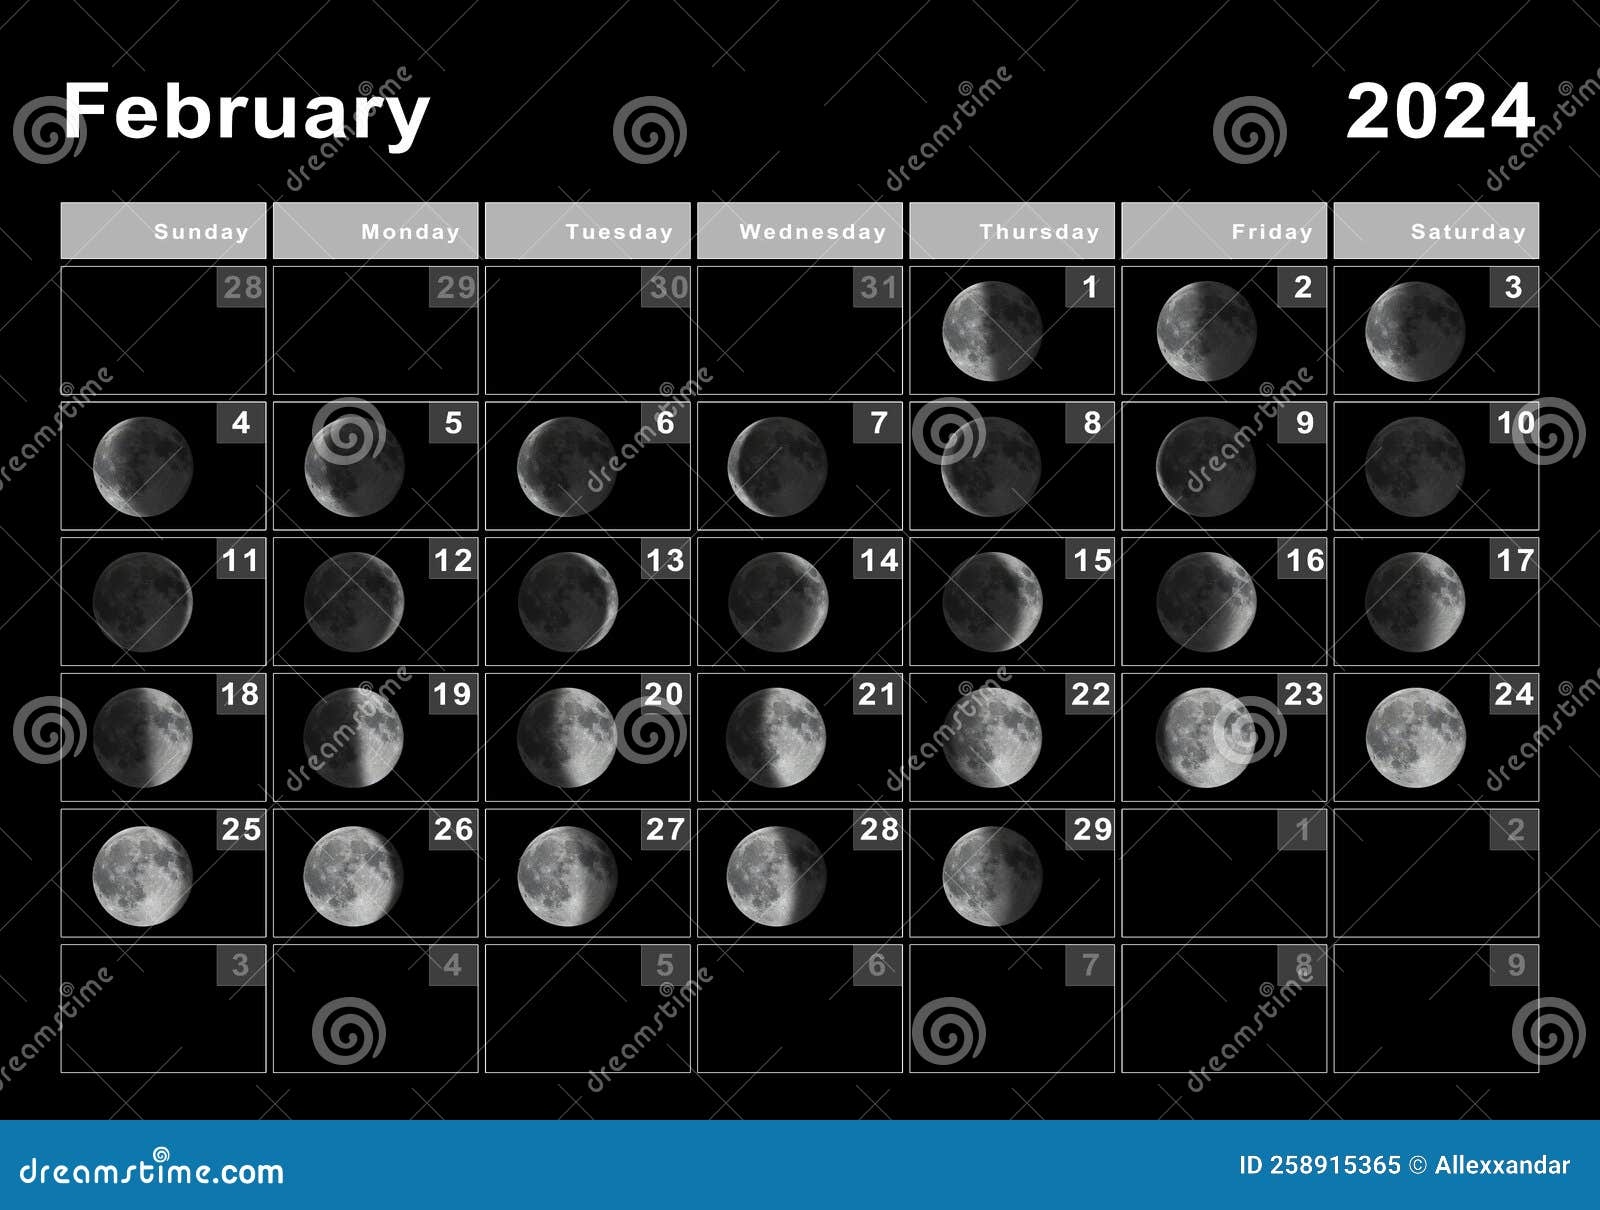 February 2024 Lunar Calendar Moon Cycles Stock Illustration - Free Printable 2024 Lunar Calendar